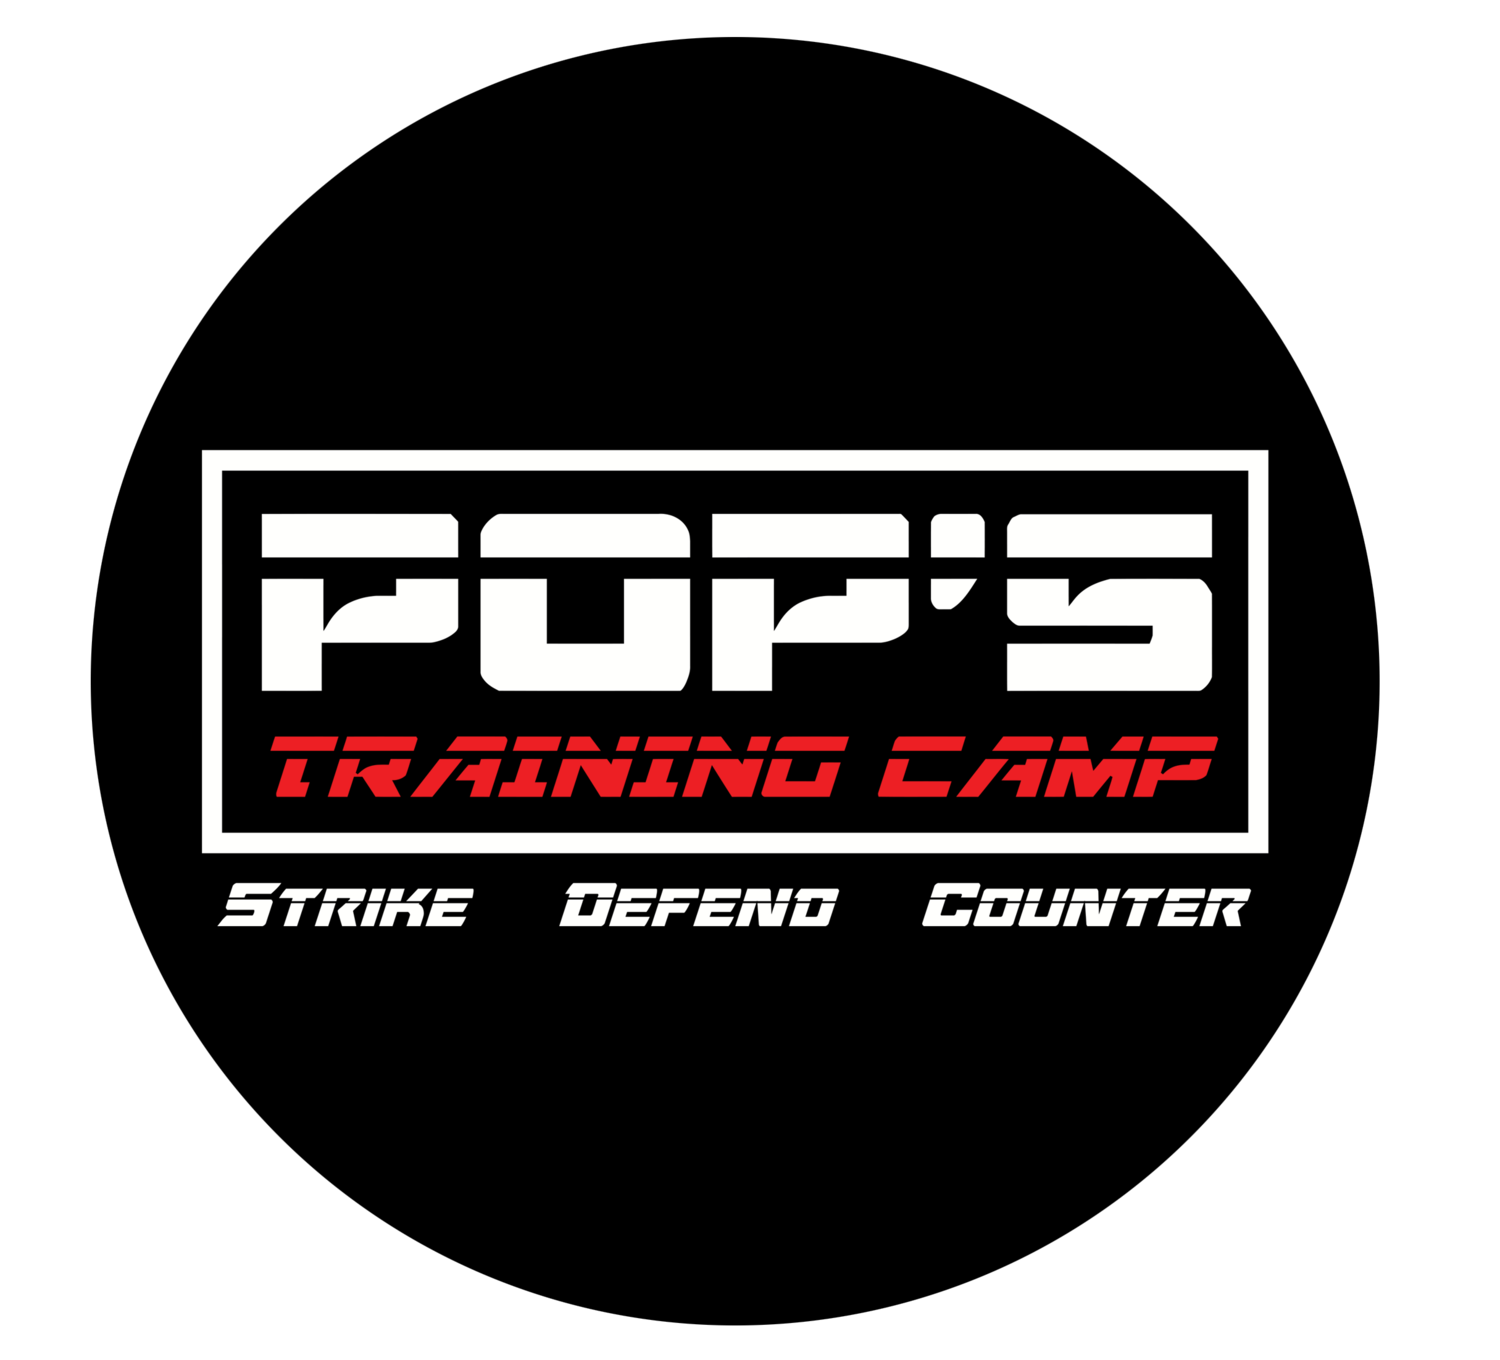 Pops Training Camp